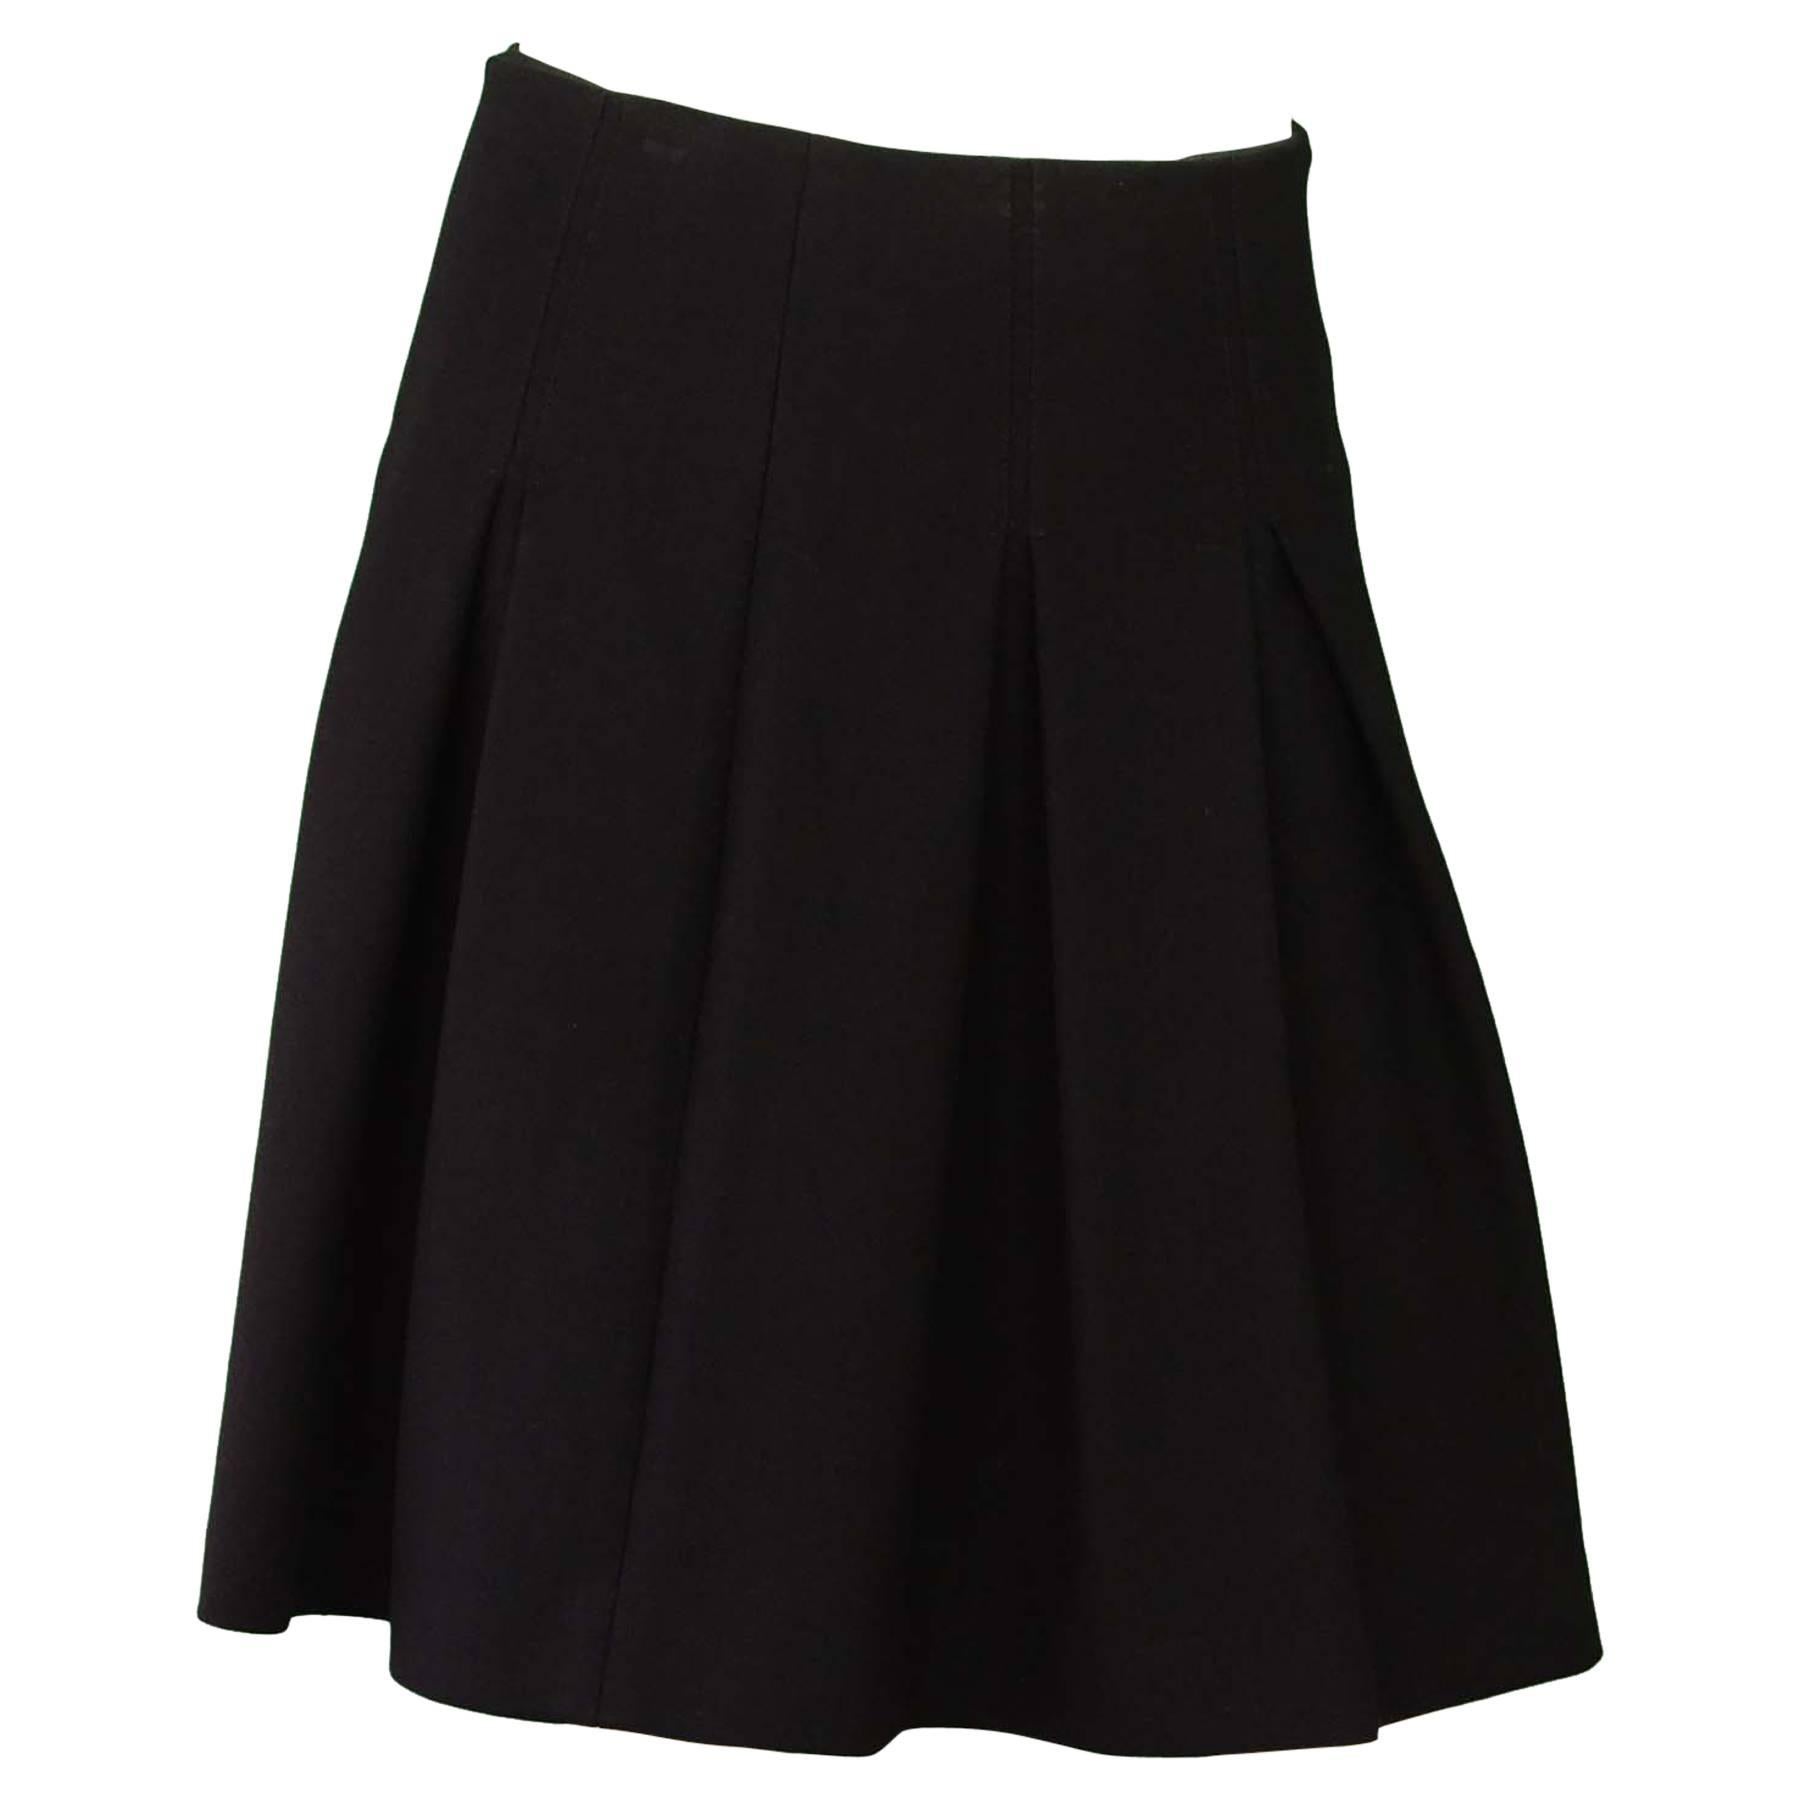 Proenza Schouler Black Inverted Pleated Skirt Sz 8